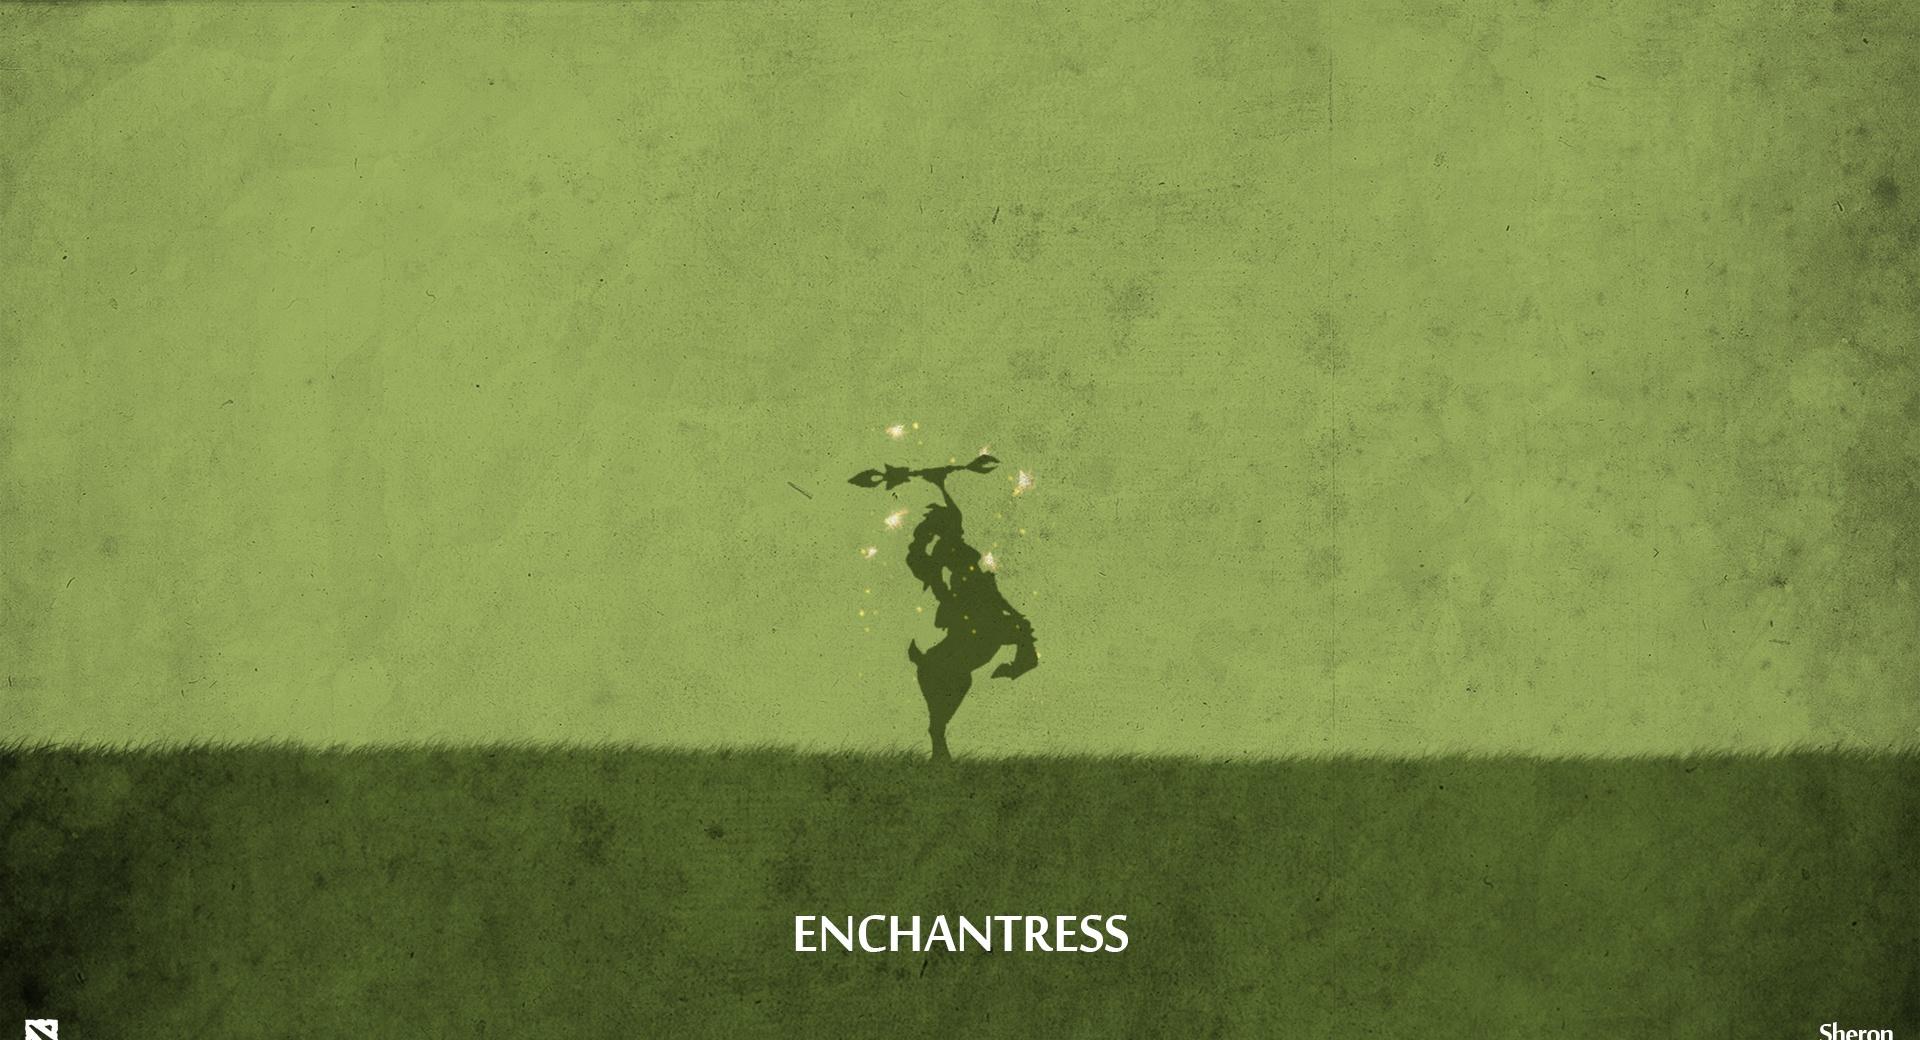 Enchantress - DotA 2 at 1600 x 1200 size wallpapers HD quality